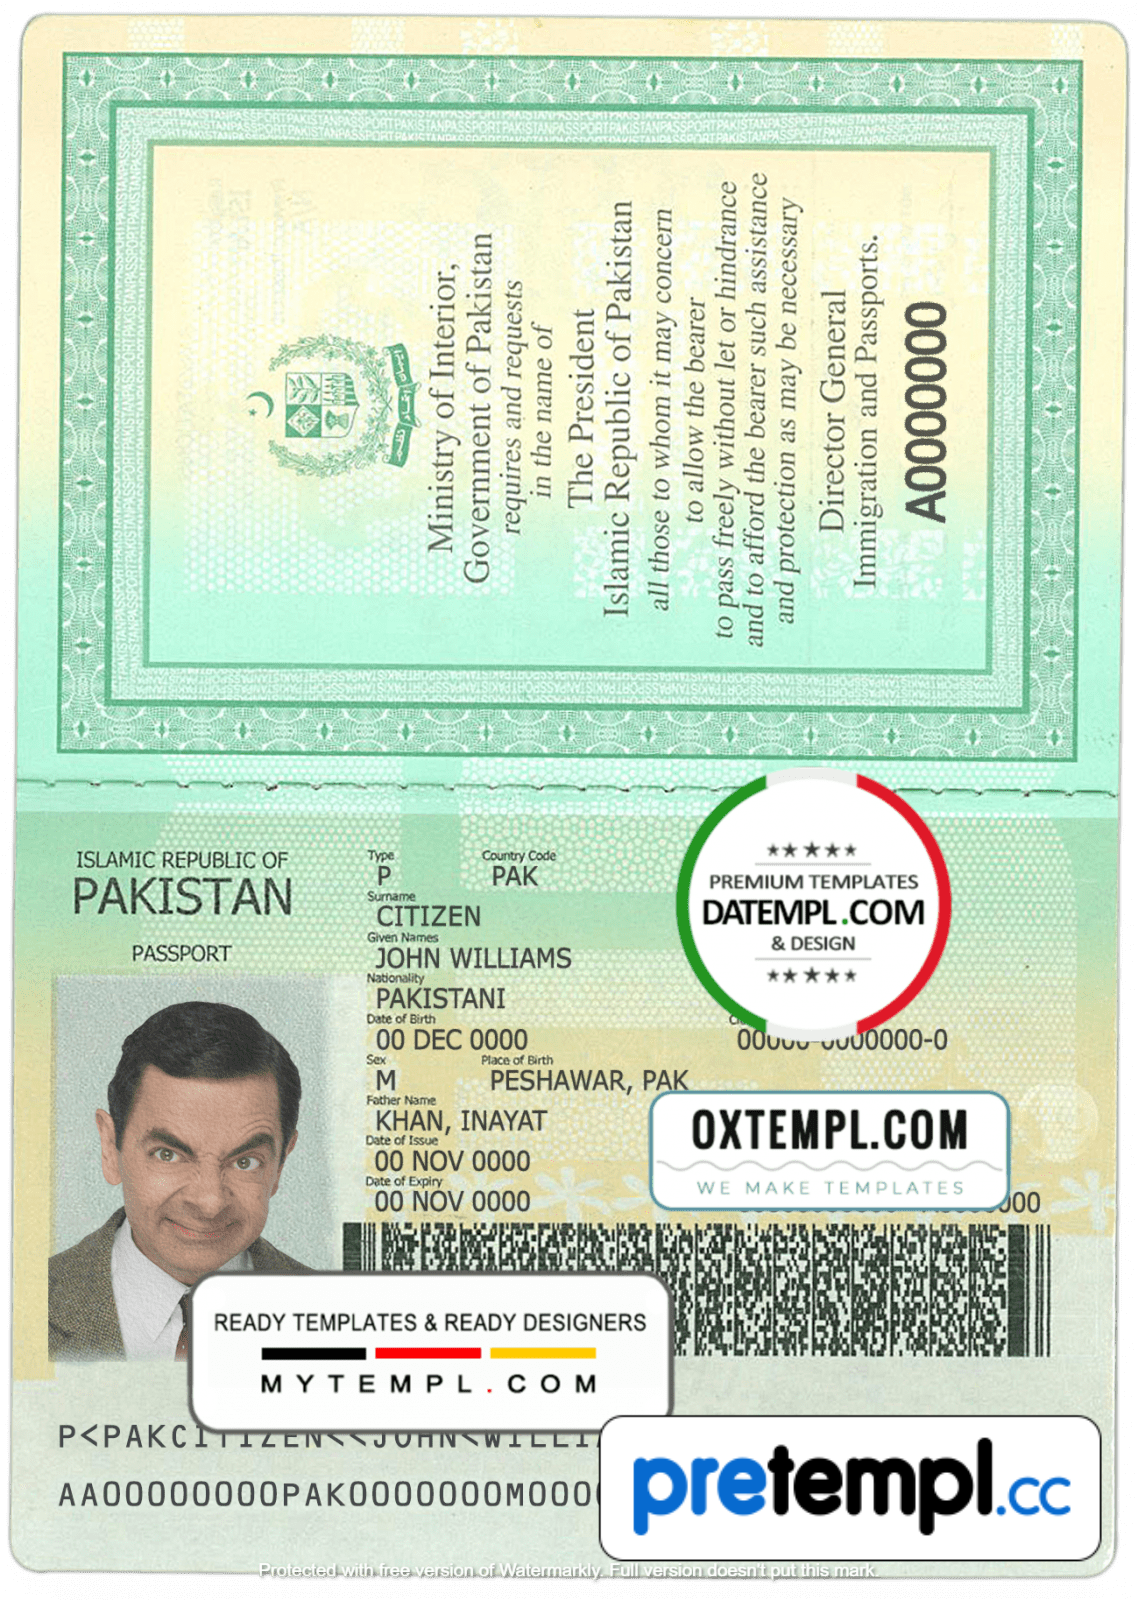 Pakistani passport example in PSD format - Pretempl